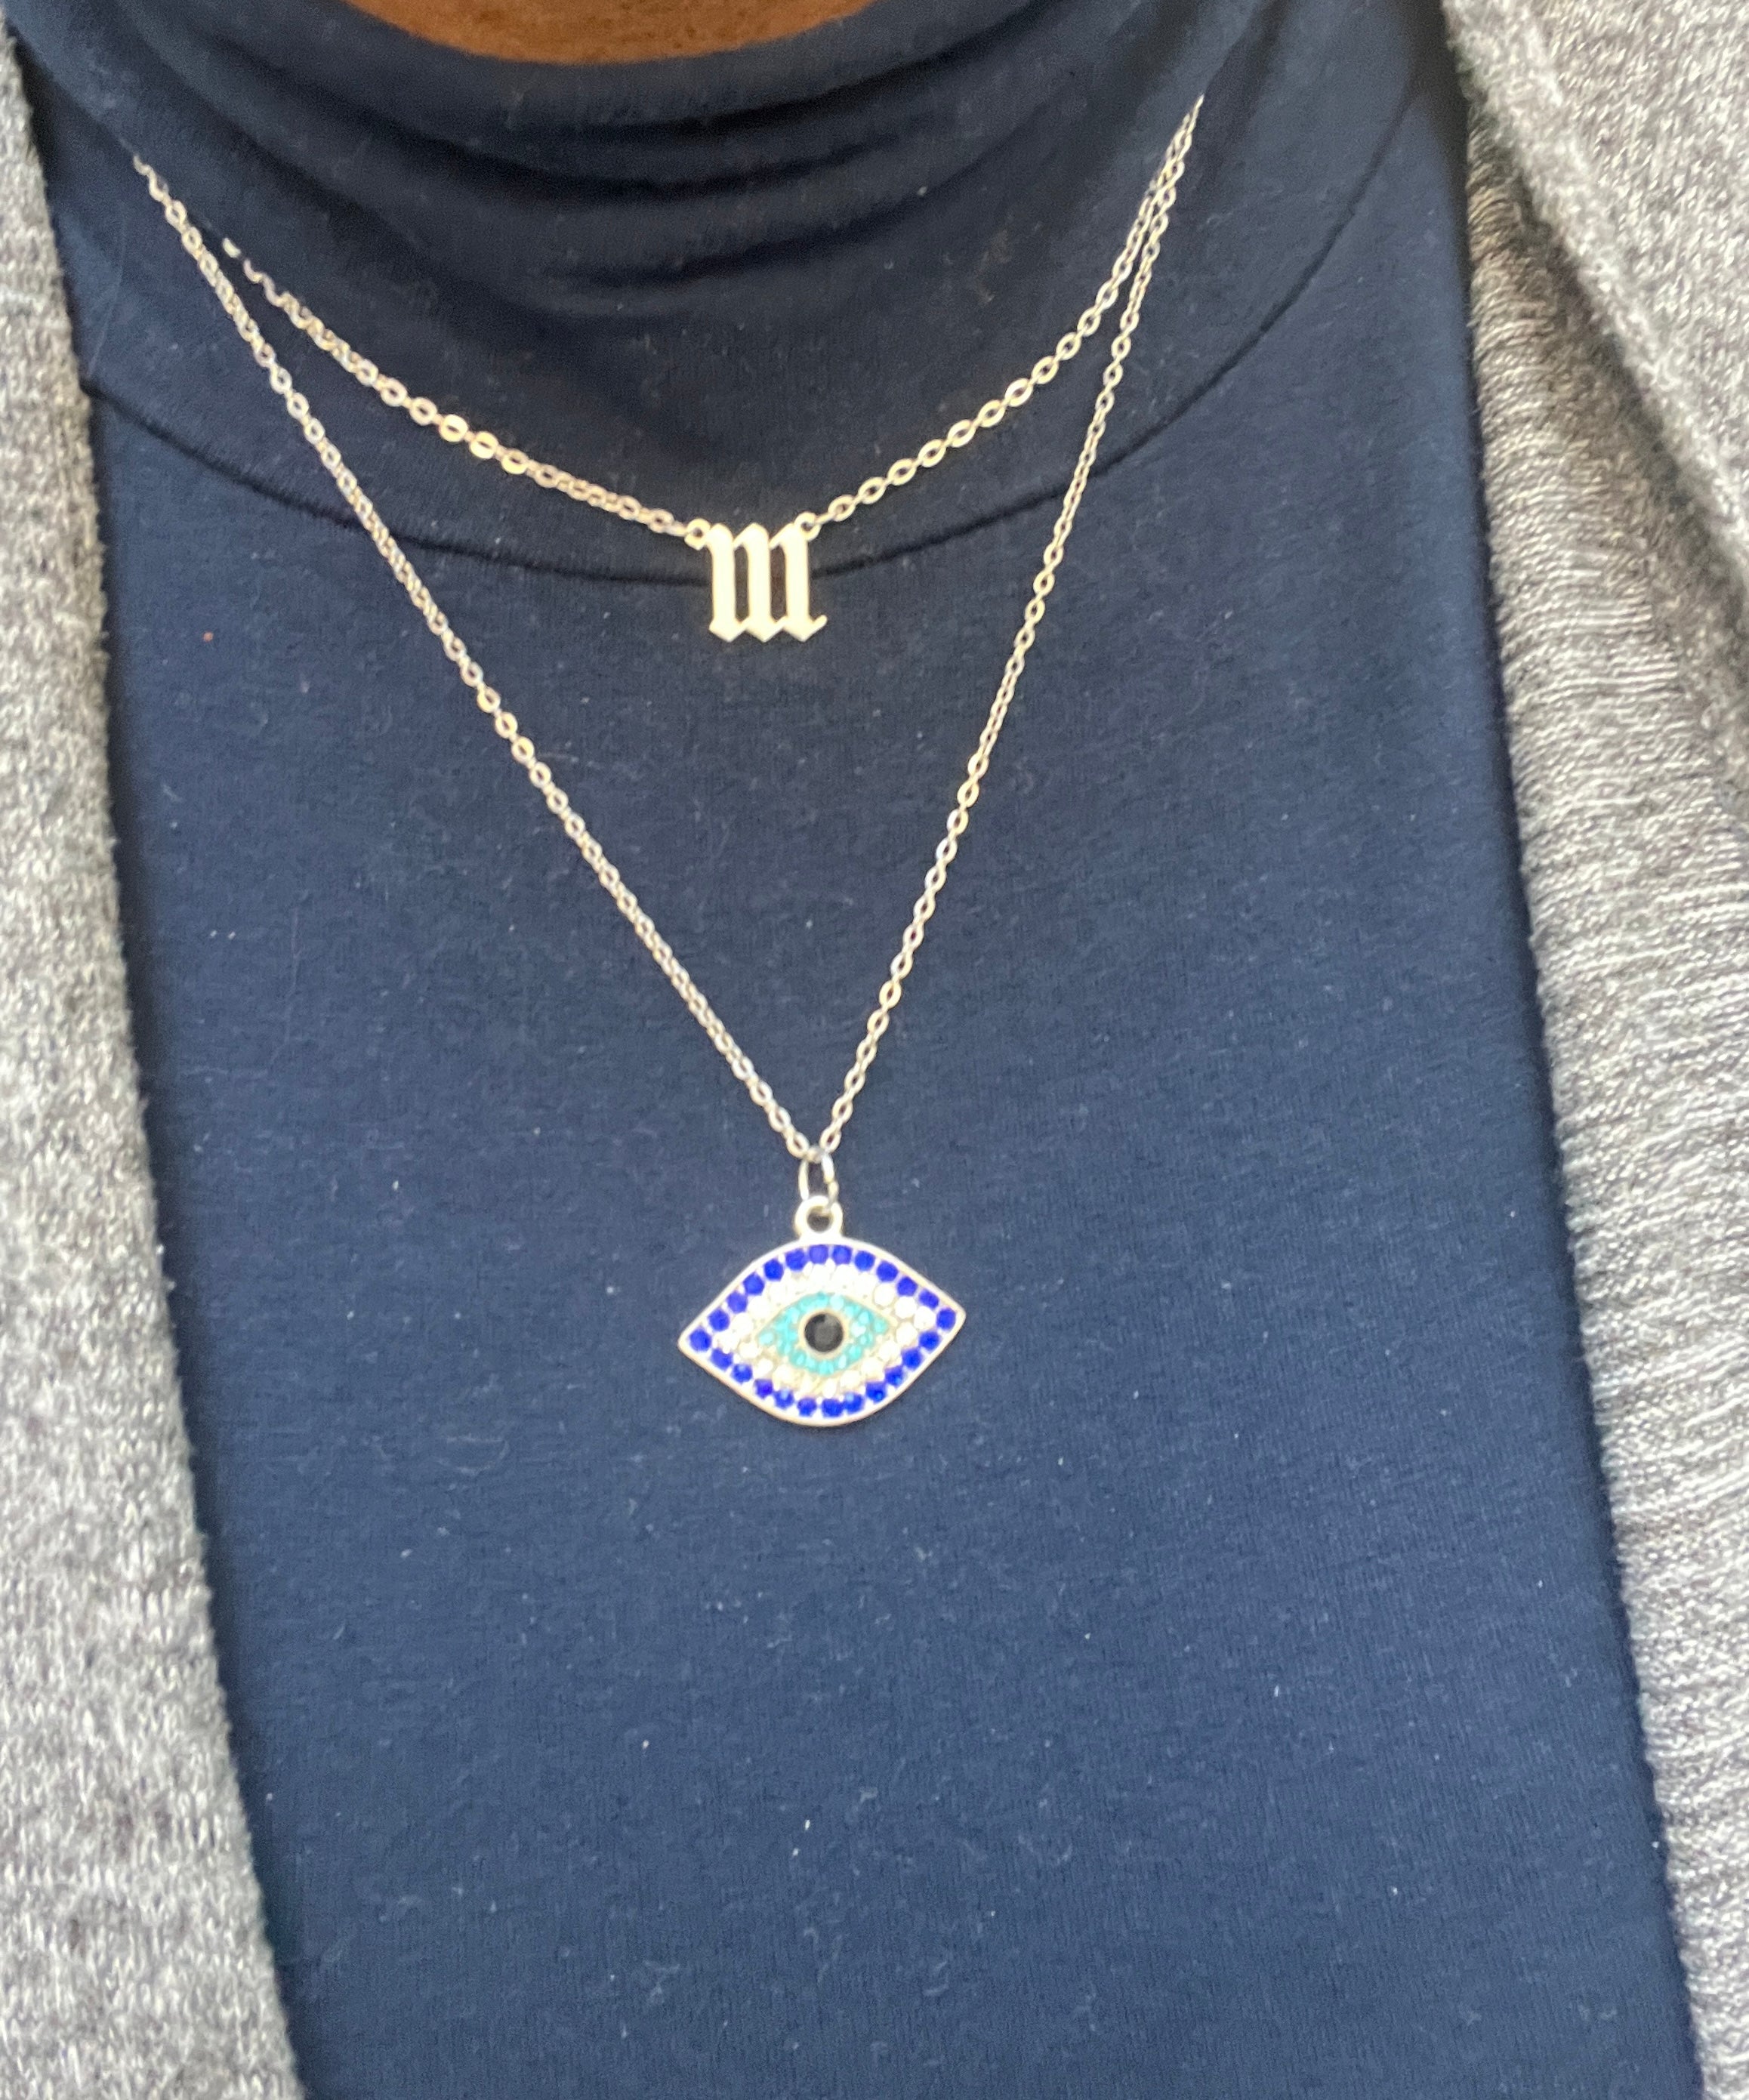 Evil Eye Pendant Necklace